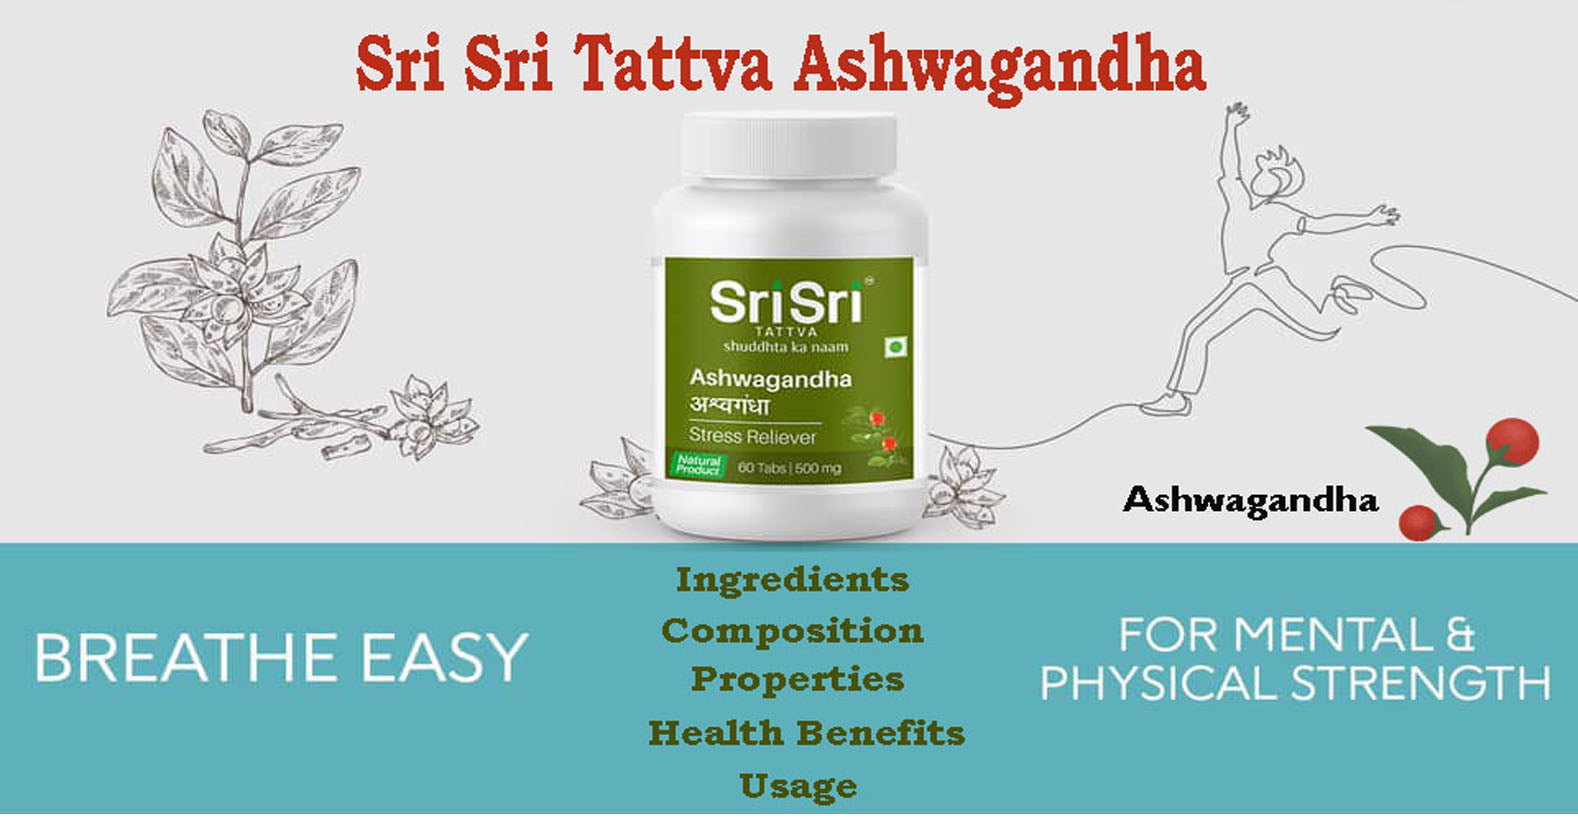 Sri Sri Tattva USA Ashwagandha - Ingredeints, Composition, Properties, Health Benefits, Usage